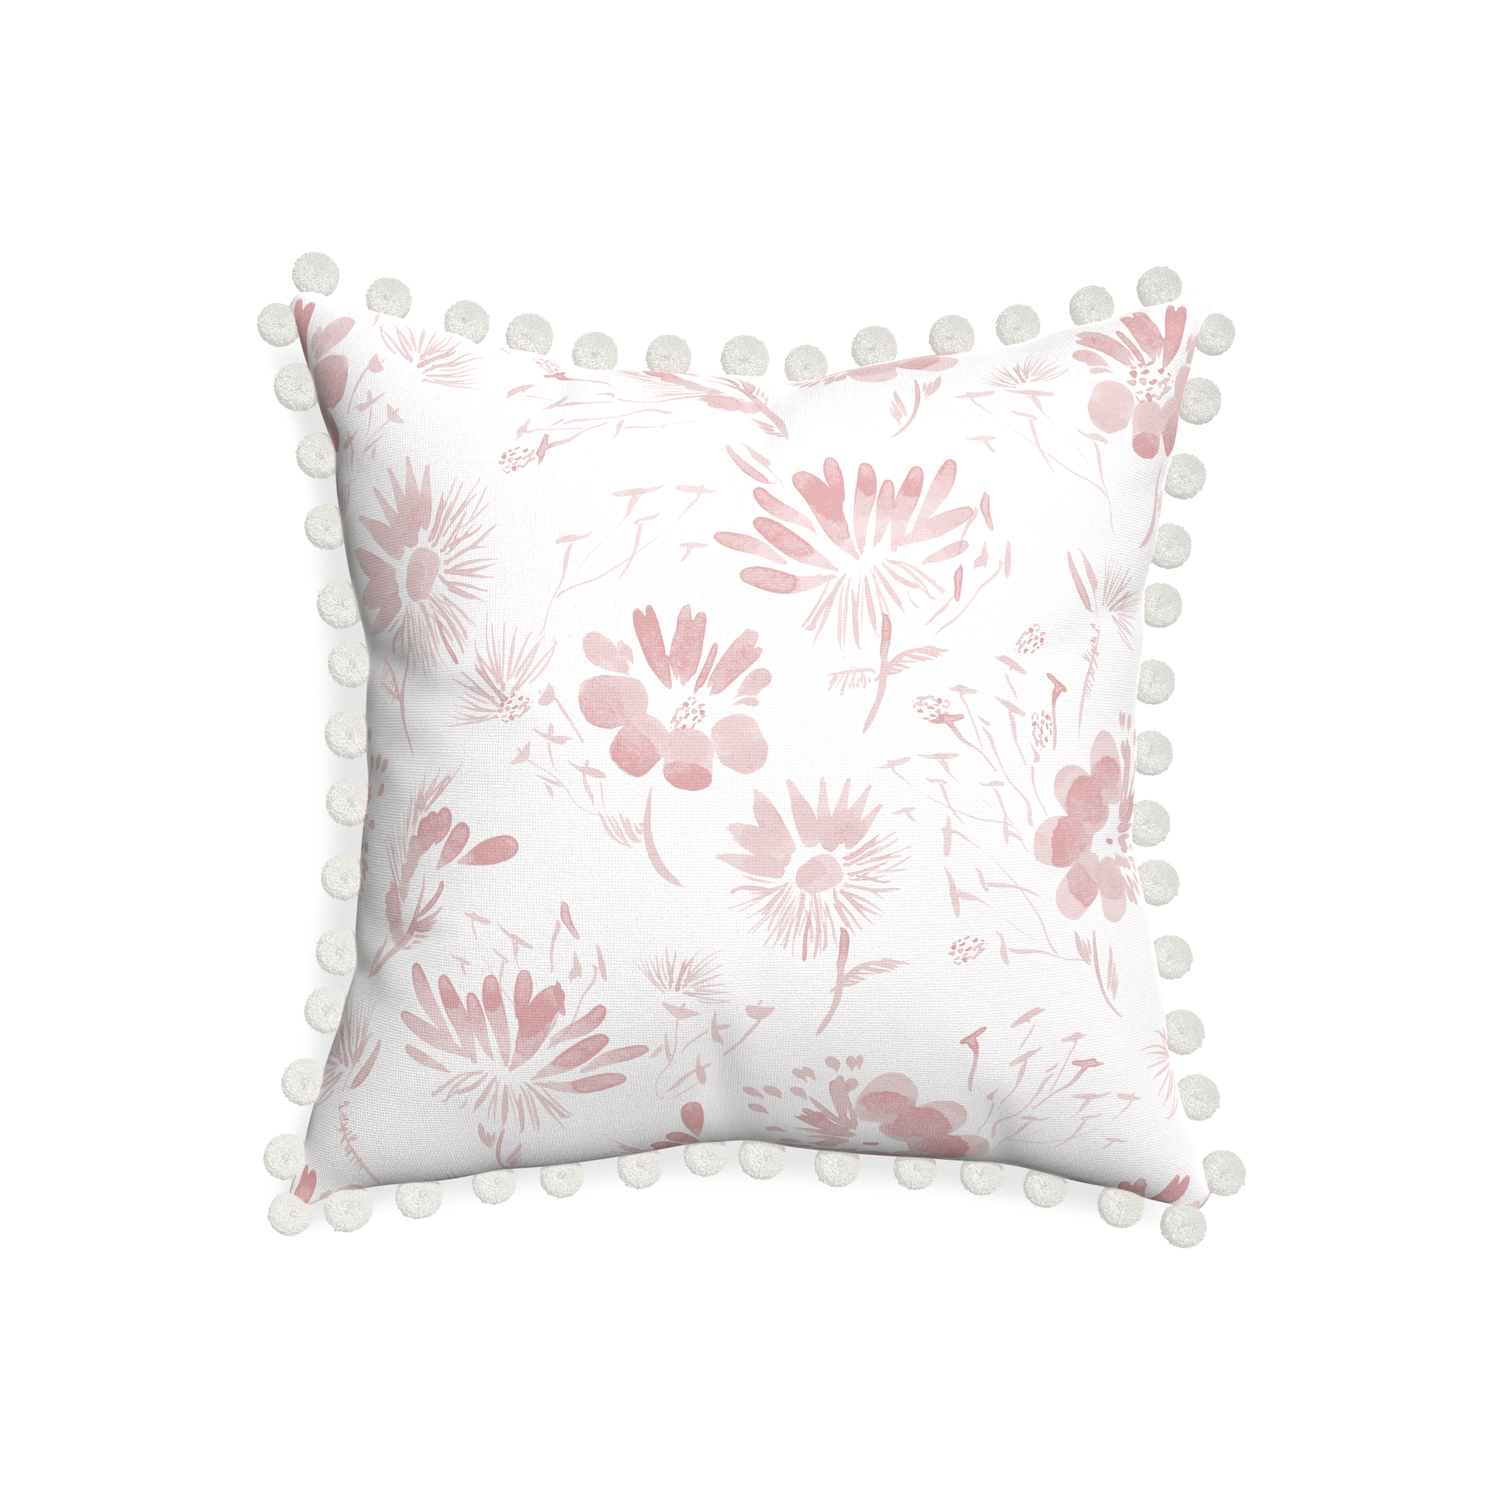 20-square blake custom pillow with snow pom pom on white background